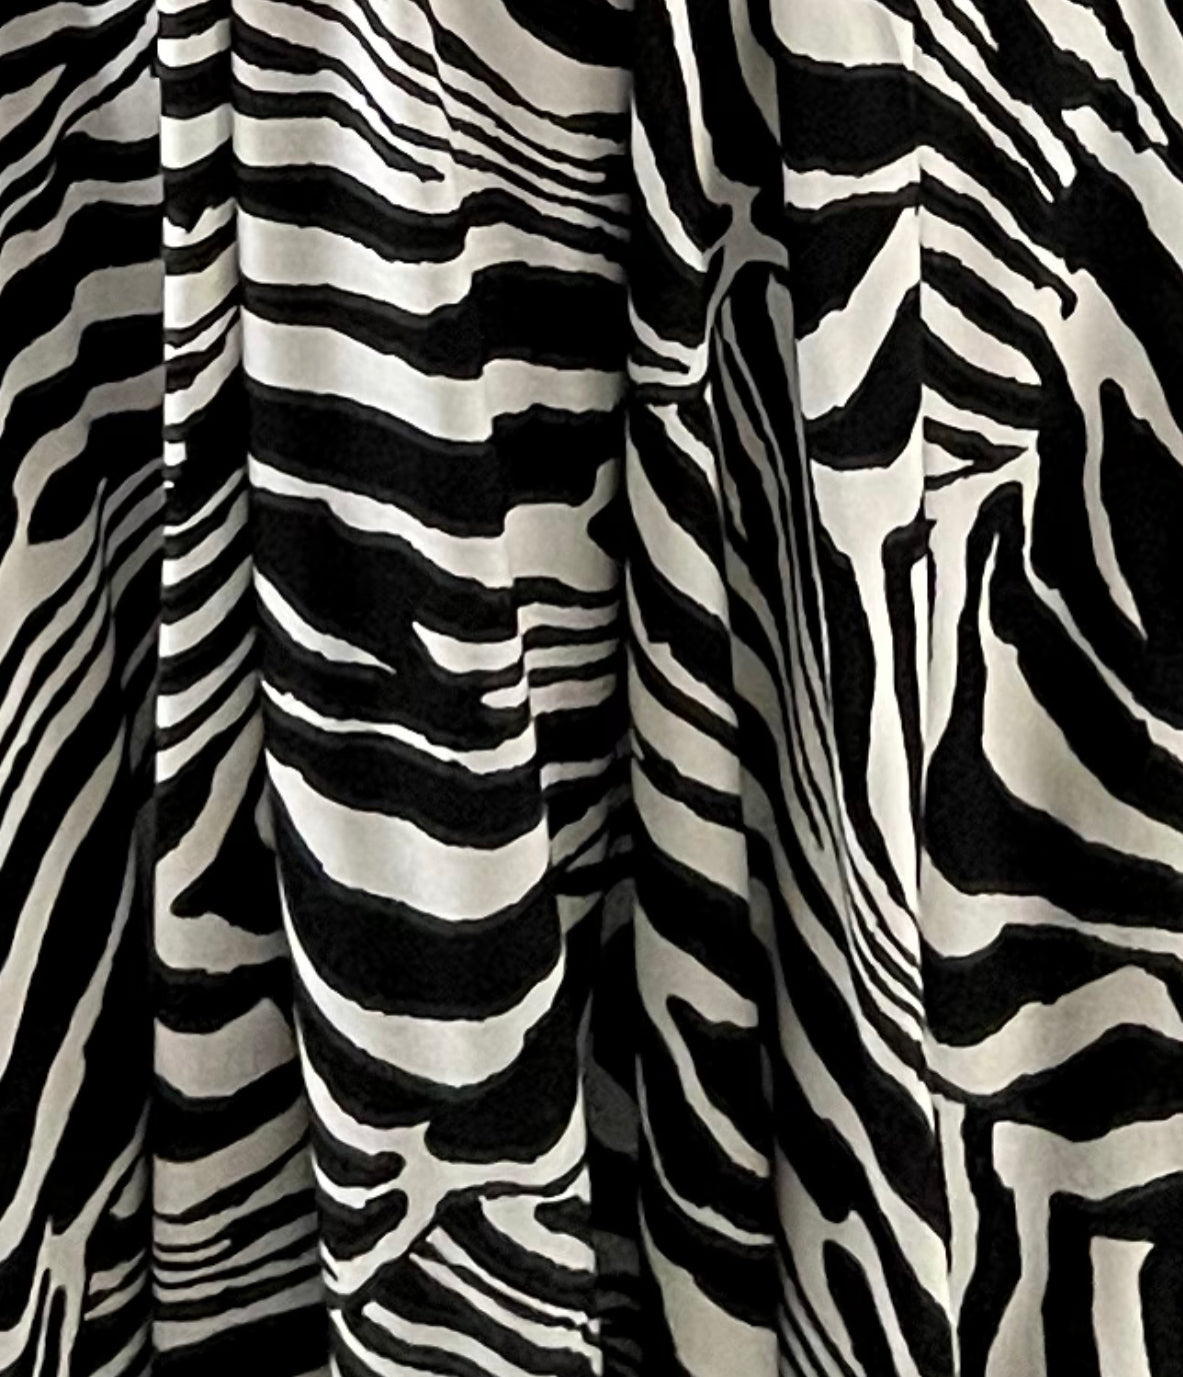 Island life shorts - Zebra